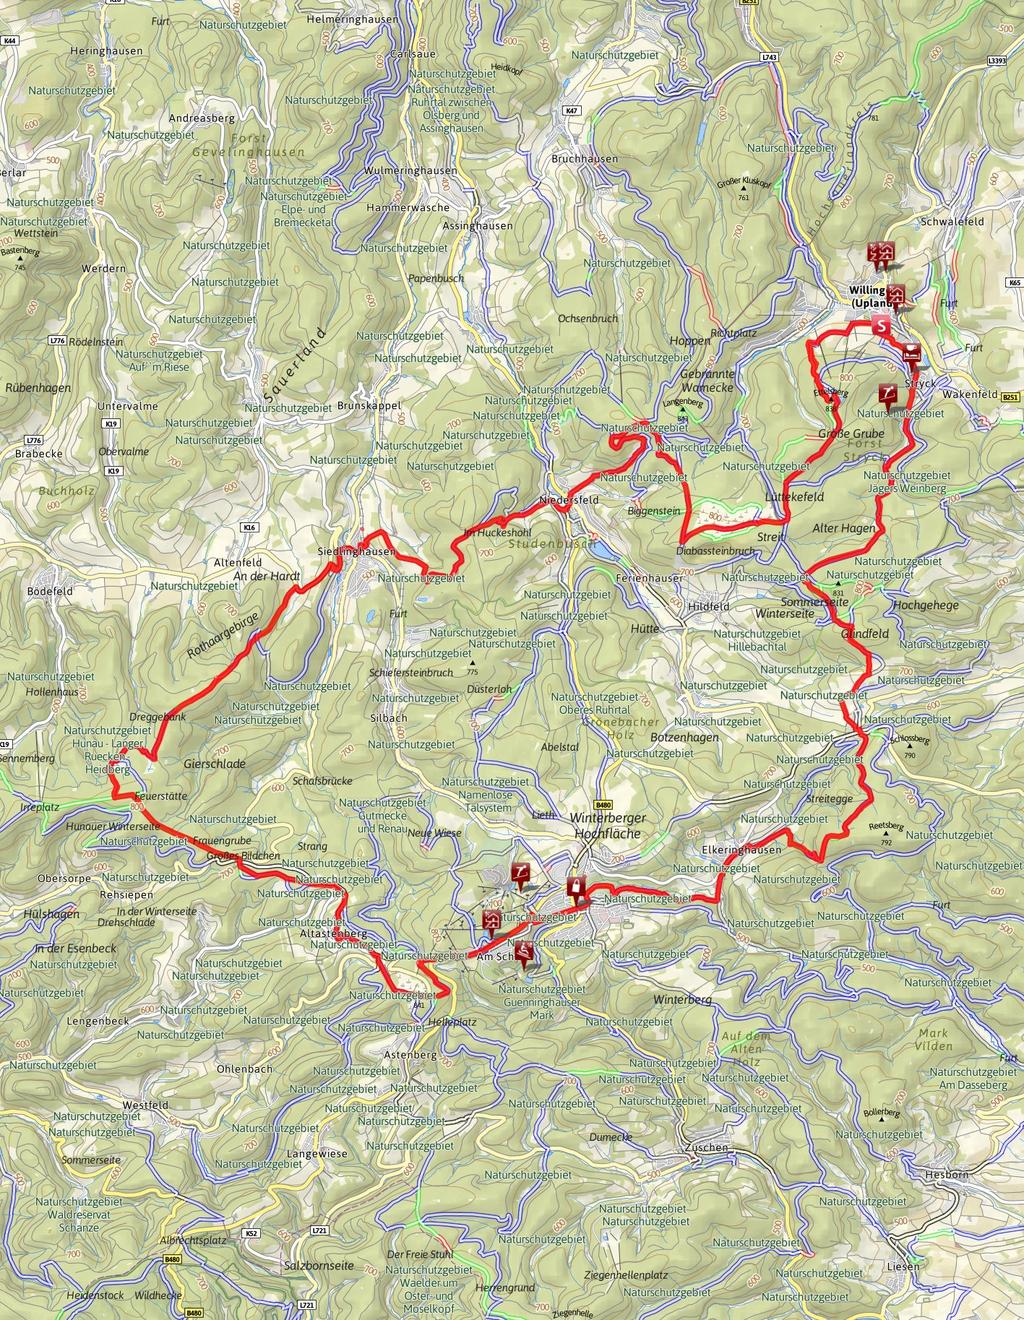 61.1 km 6:05 h 1633 m 1636 m Difficulty Base Map: outdooractive Kartografie; Germany: GeoBasis-DE / BKG 2016, GeoBasis-DE / GEObasis.